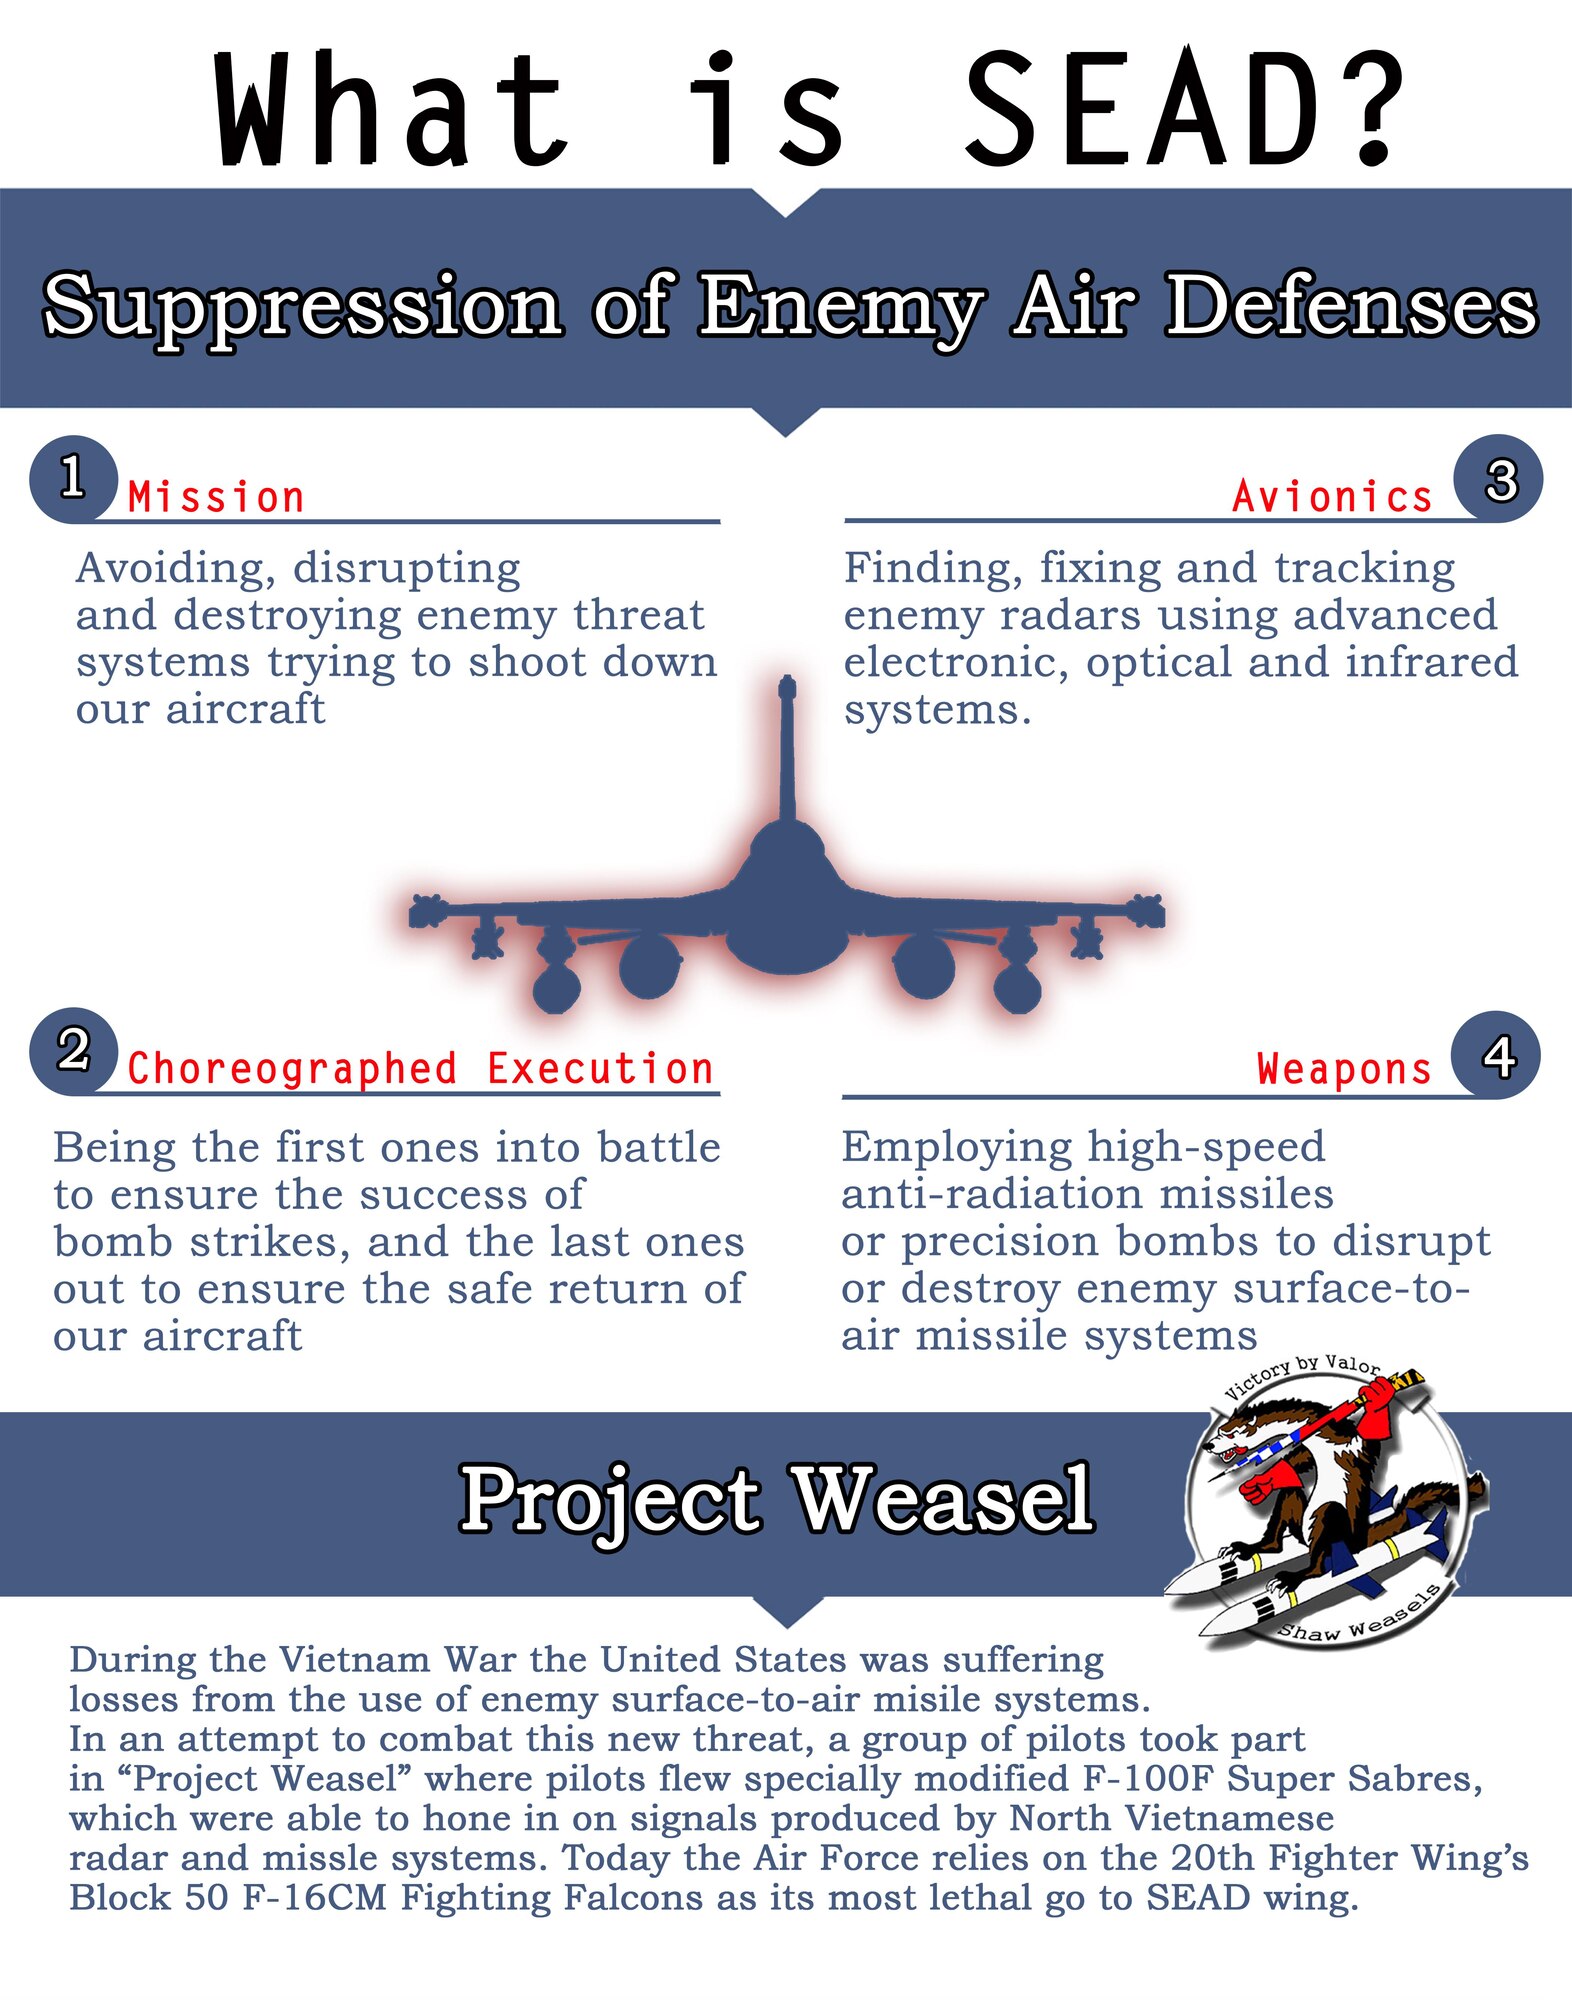 Info graphic describing the suppression of enemy air defenses.